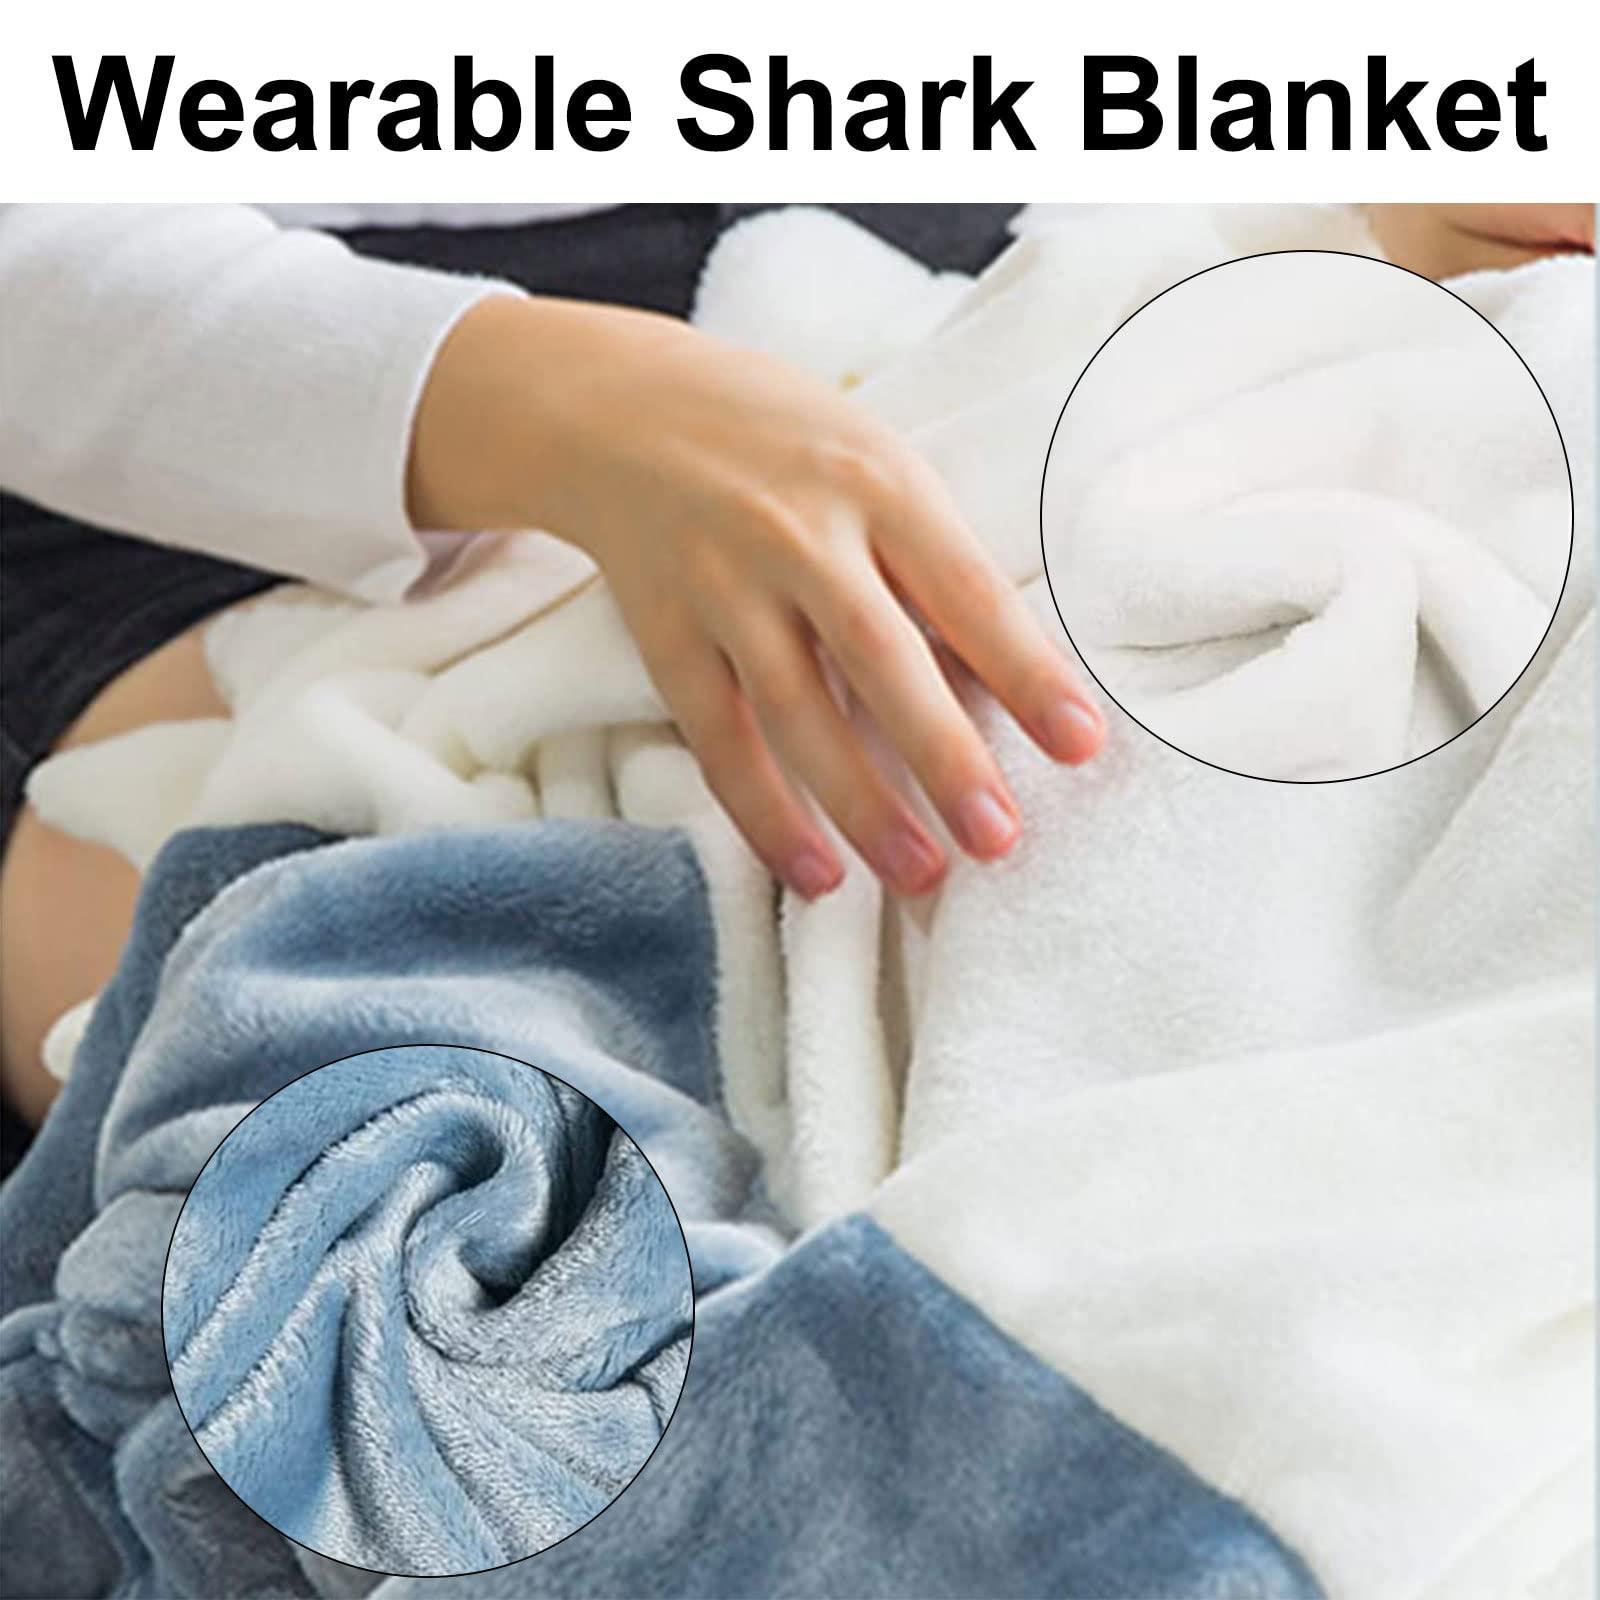 Shark Wearable Blanket - Premium Blanket - Just $29.95! Shop now at Hot Trends Online